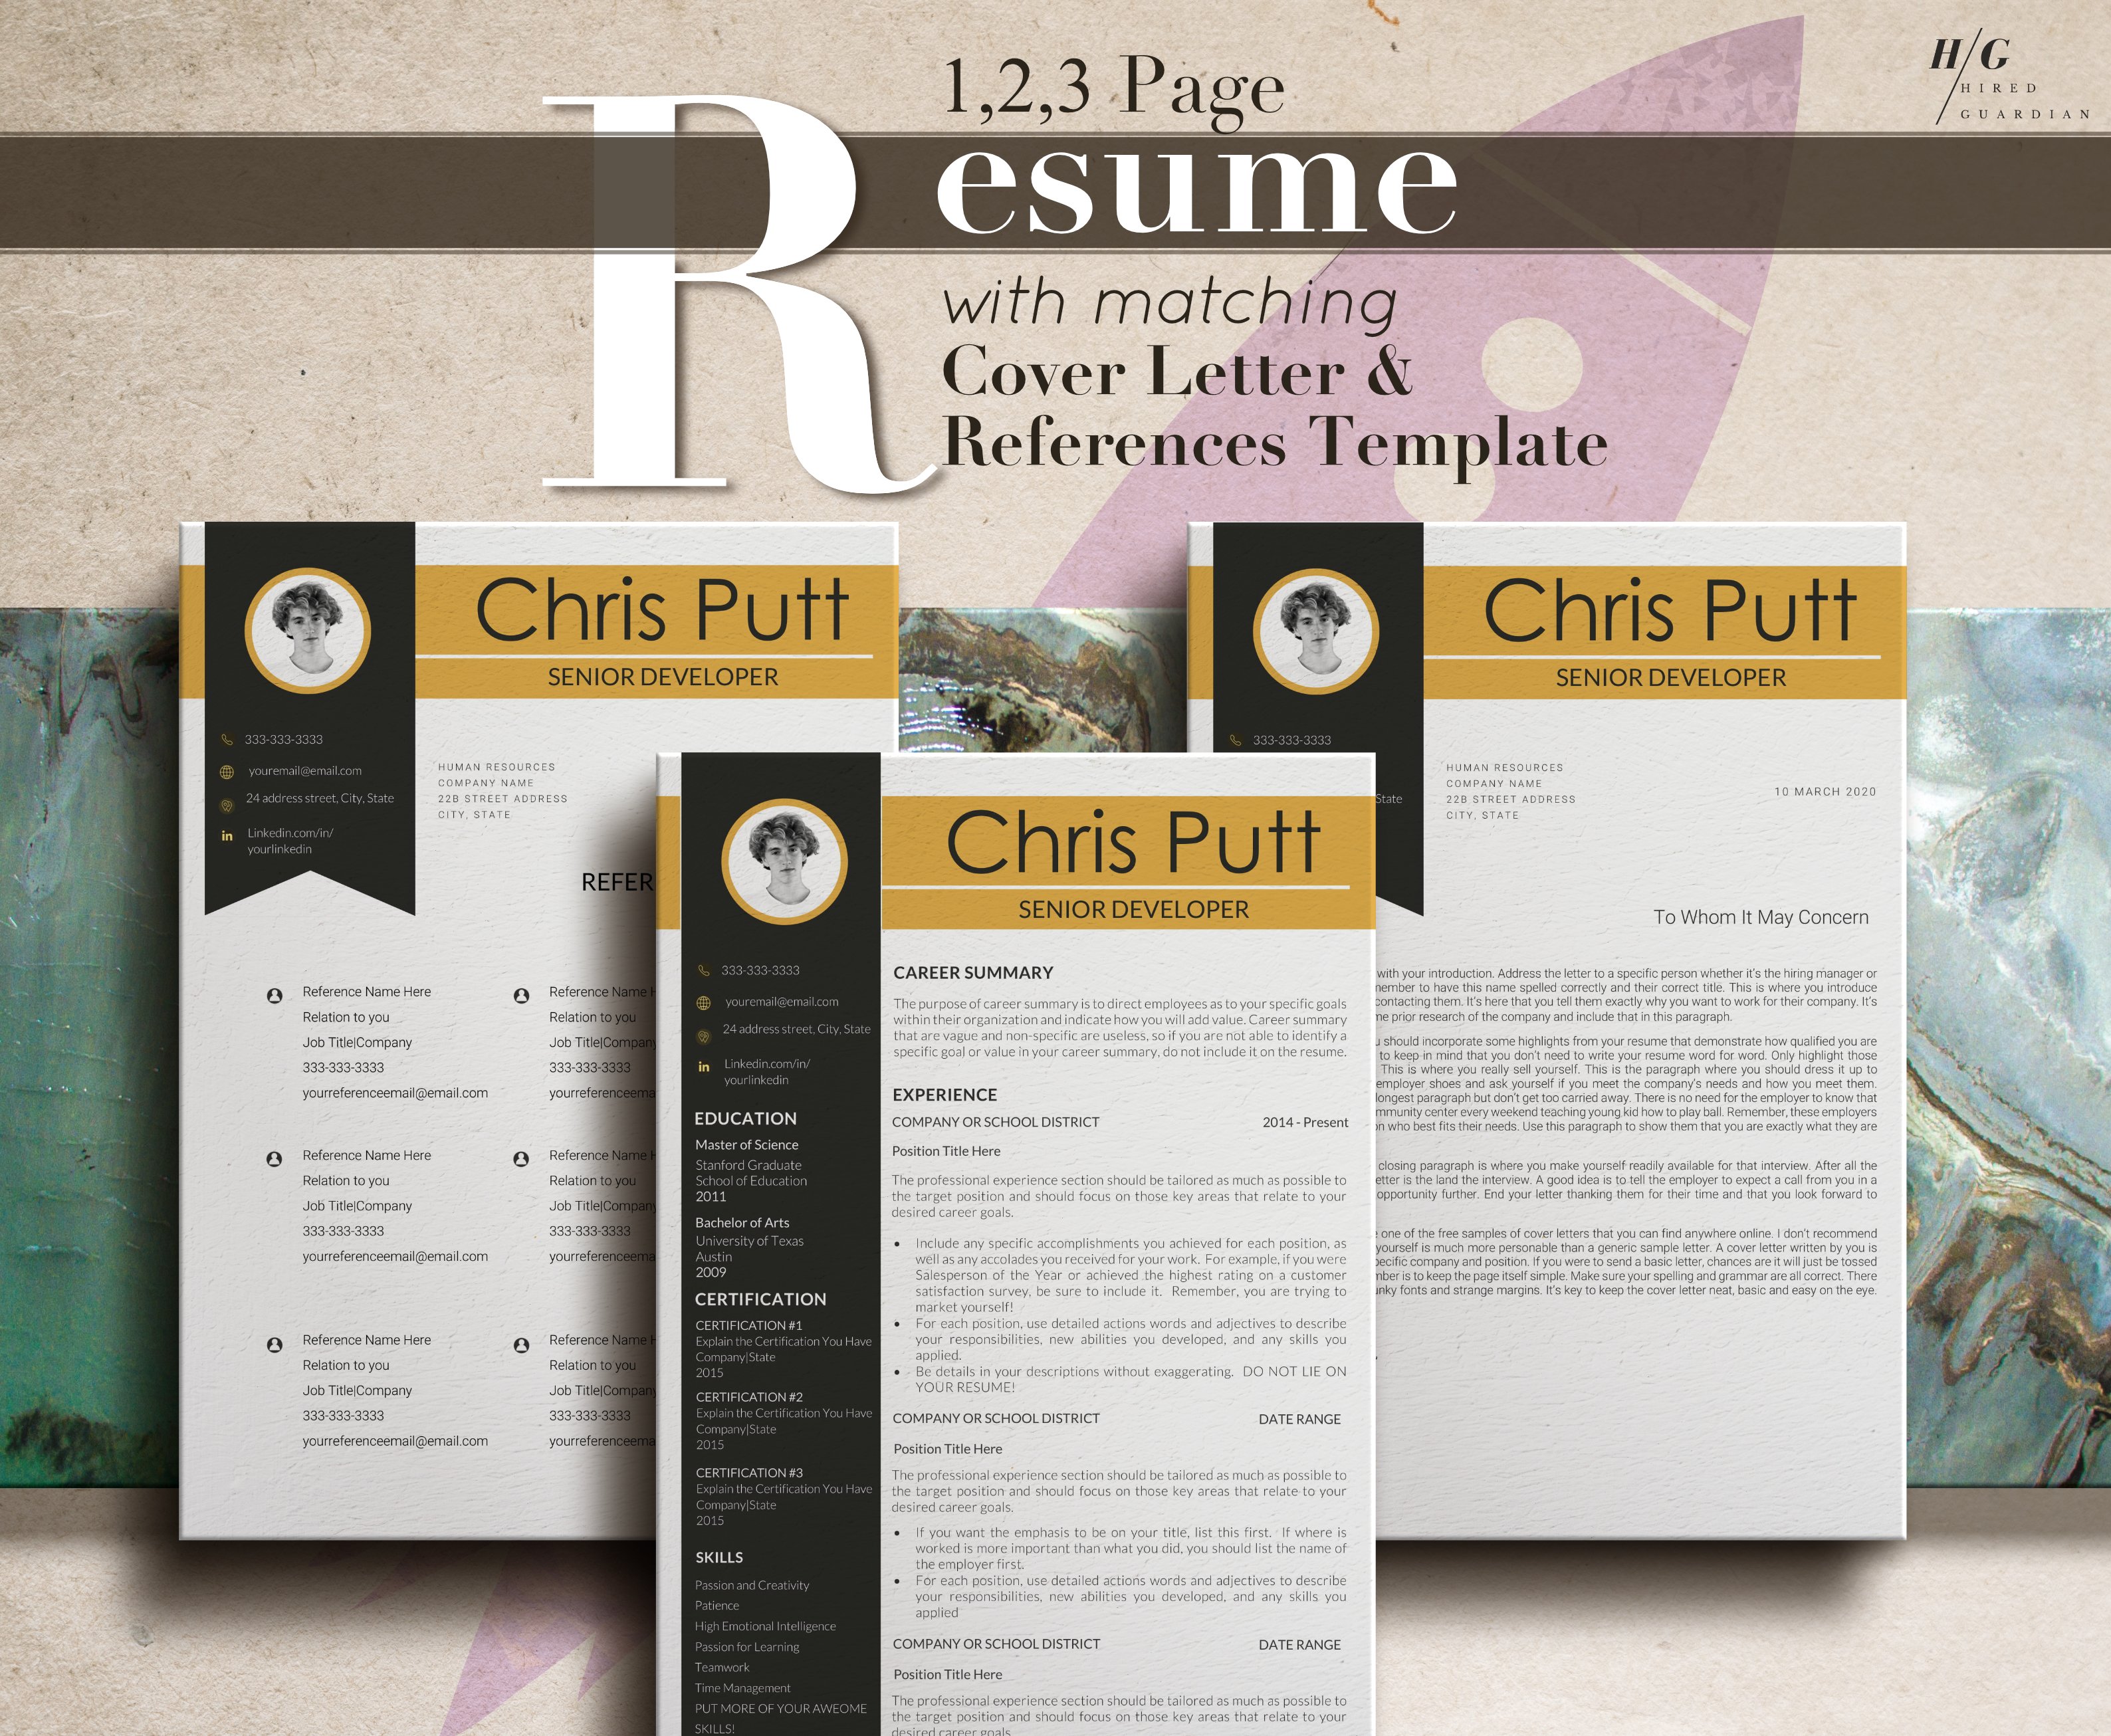 3 3 page resume template lebenslauf vorlage resume template with cover letter resume copy copy copy copy copy 2 963